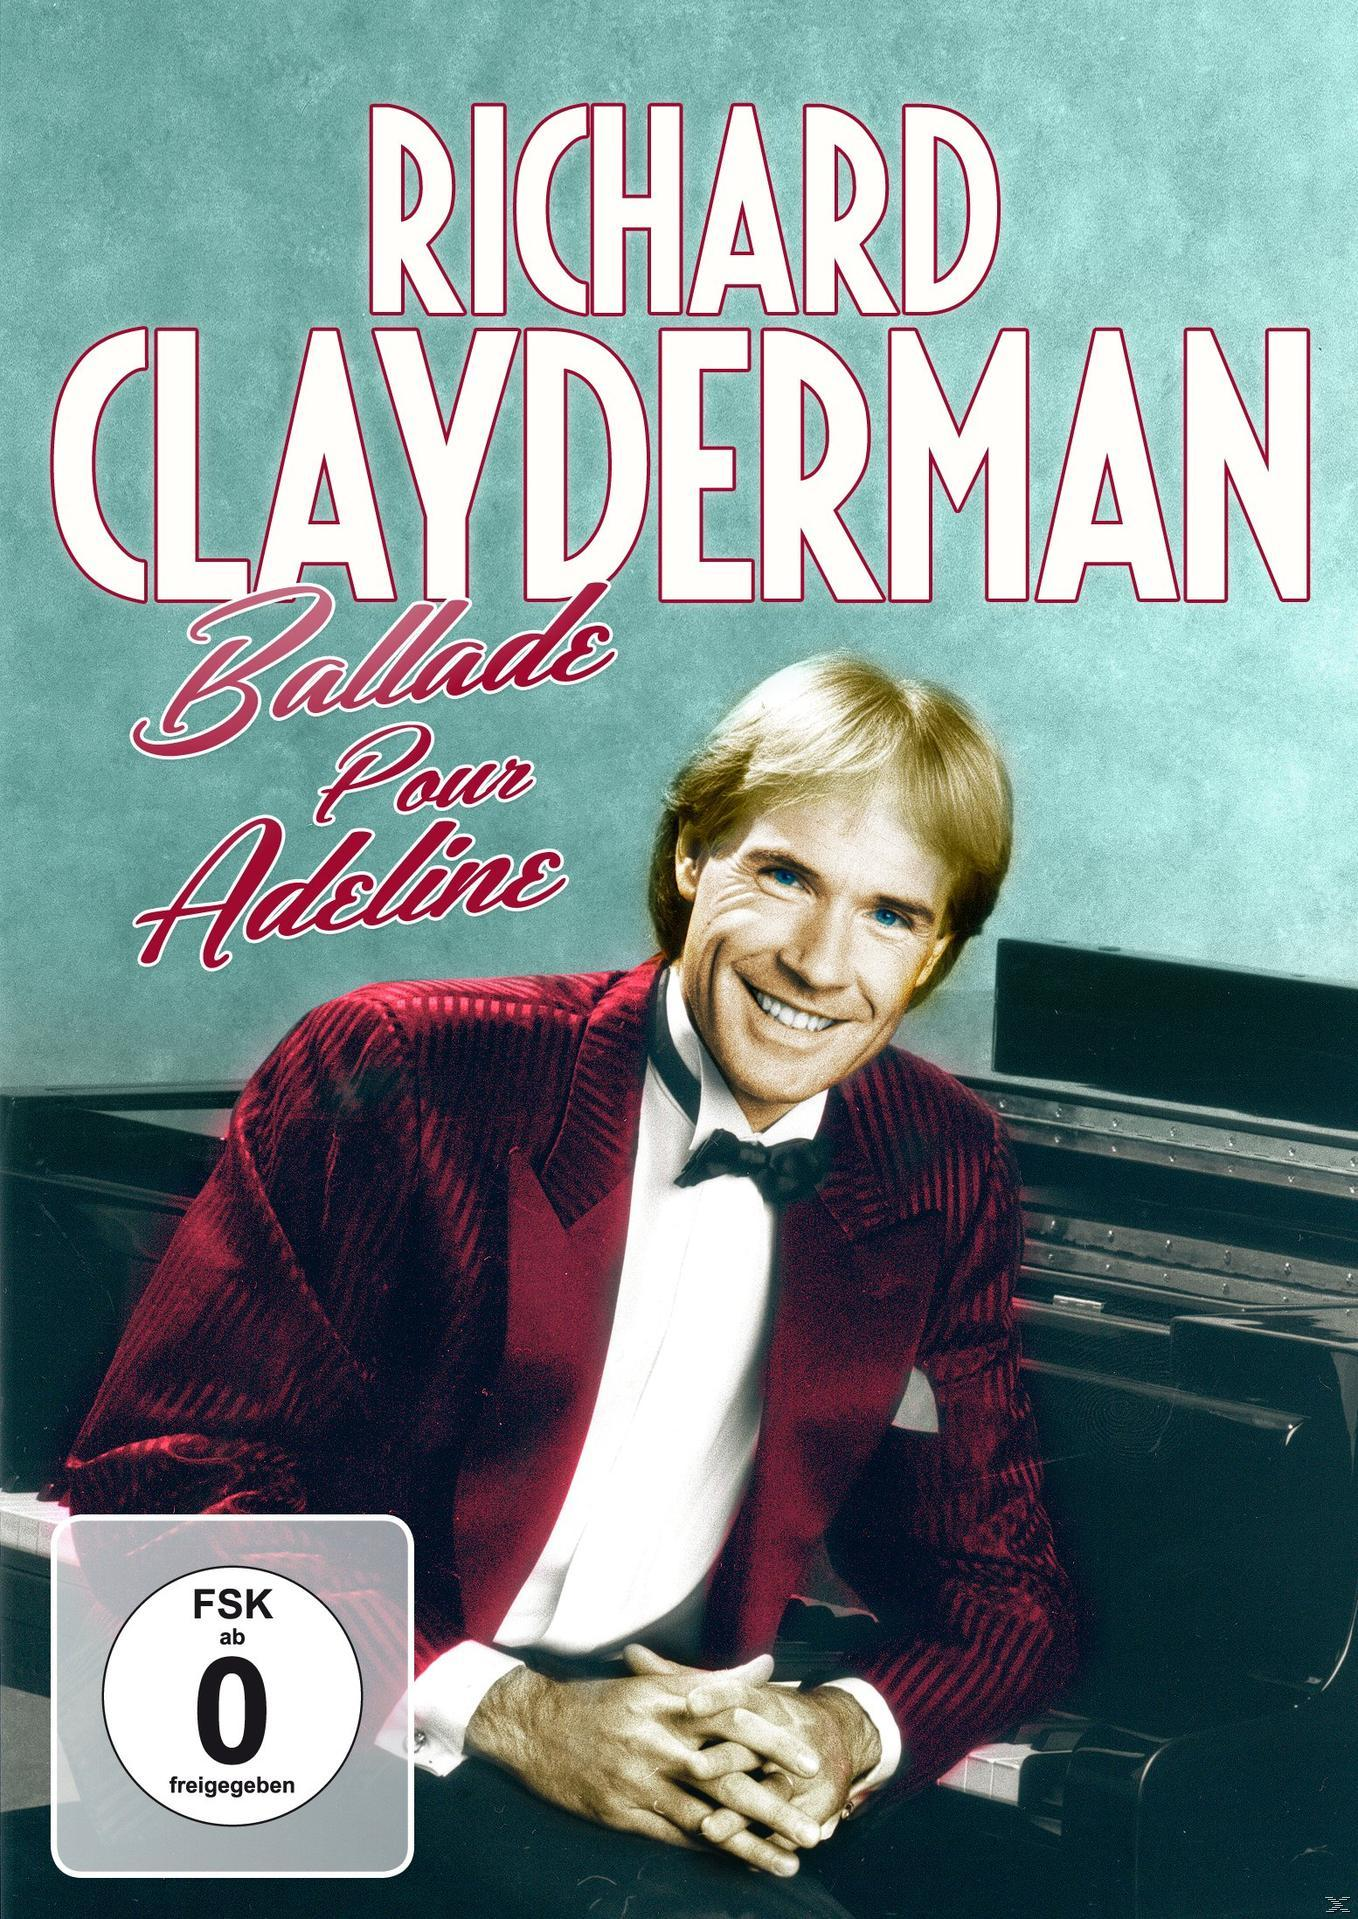 Richard Clayderman - Ballade Adeline: His Pour Hits (DVD) Greatest 